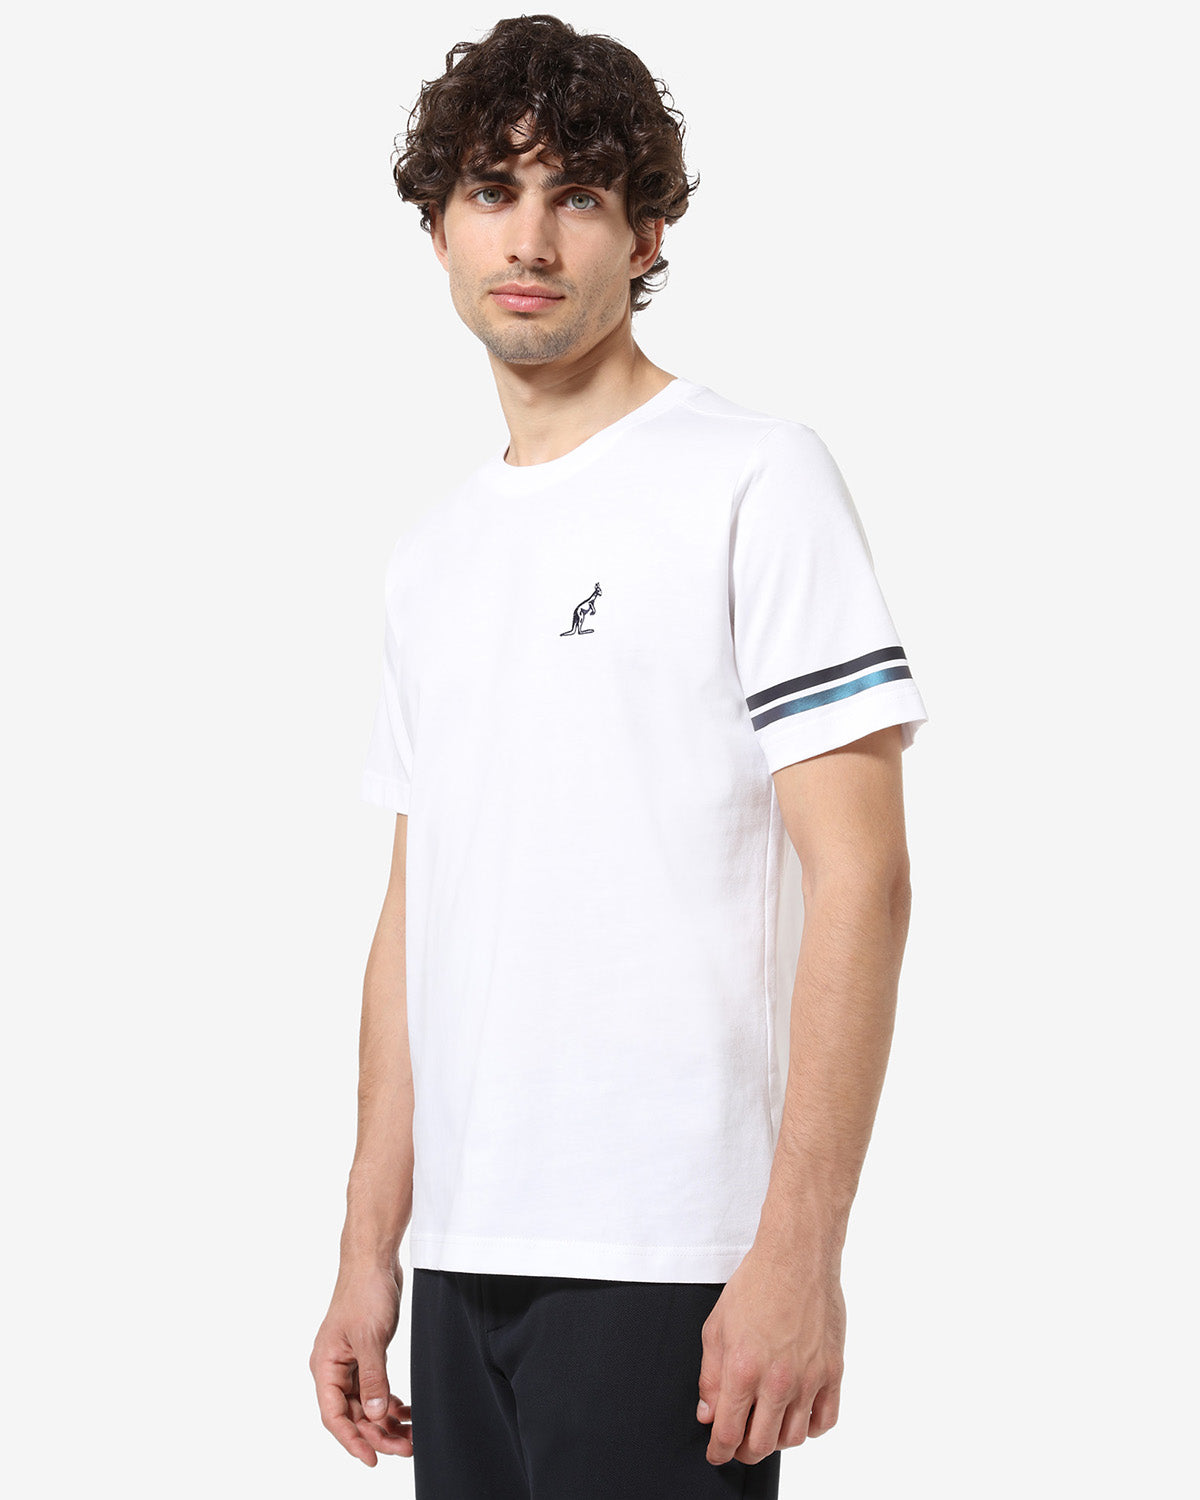 Club T-shirt: Australian Sportswear